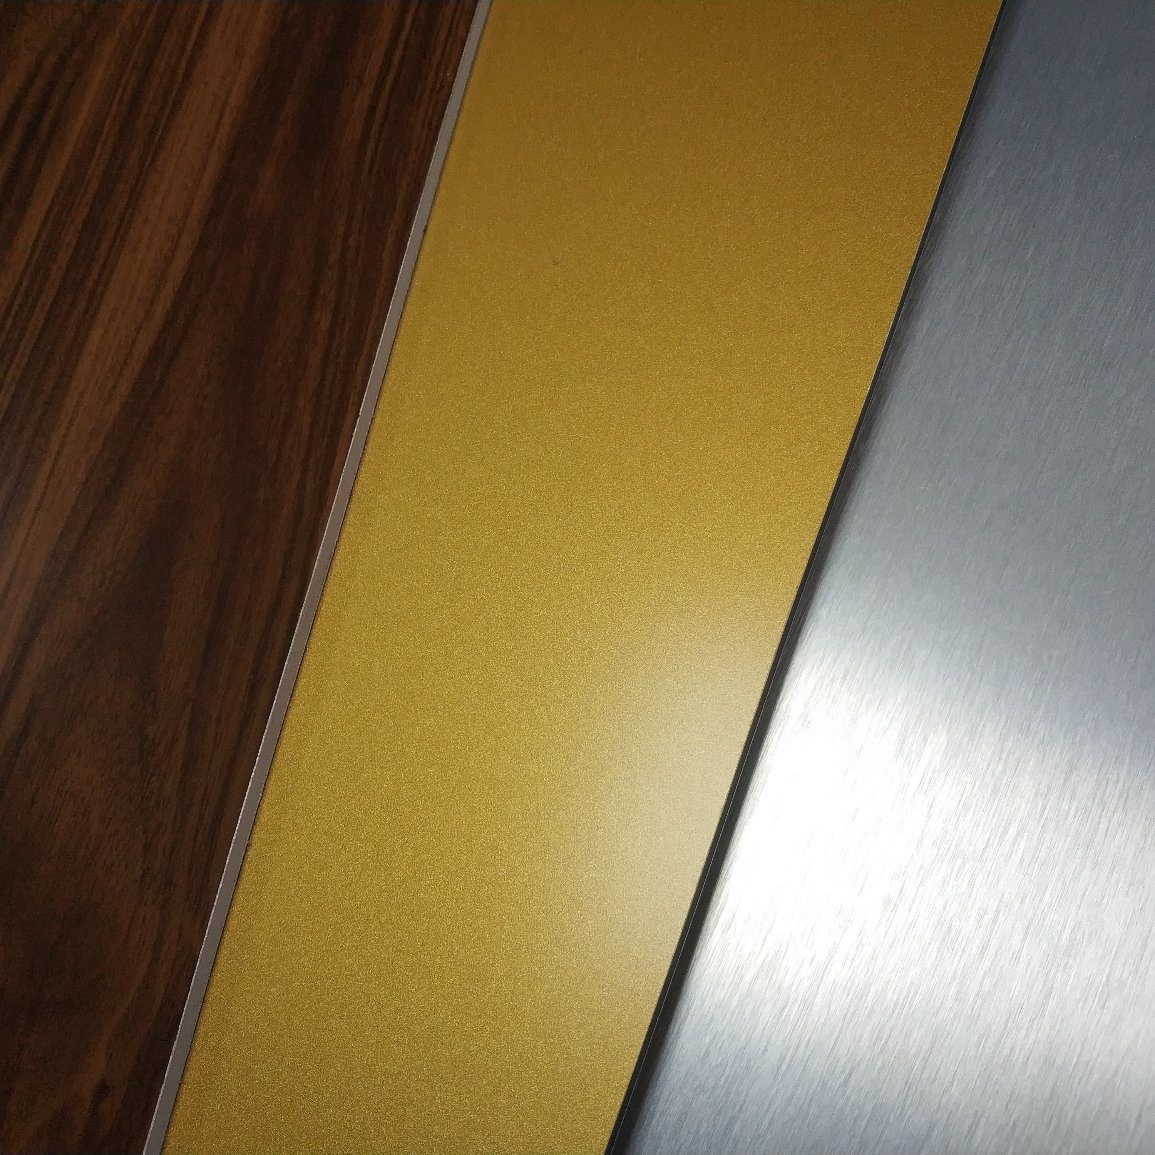  Uniform Color Coating Aluminum Composite Panel Plastic Aluminum Composite Sheet Manufactures